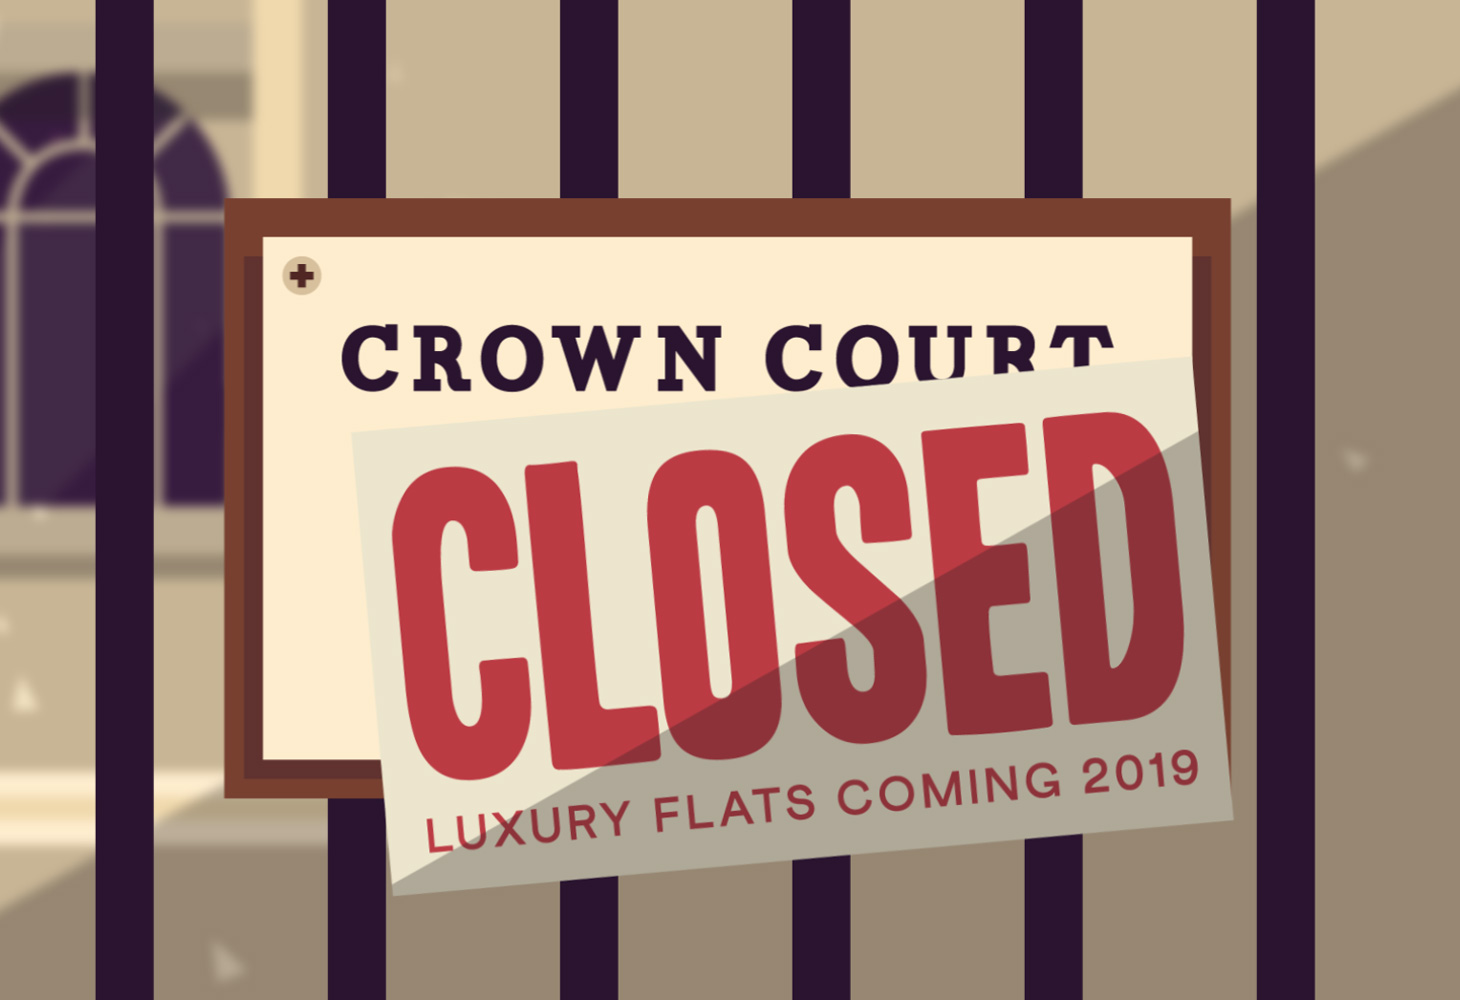 The Secret Barrister - Cinema Advert - Crown Court Closed